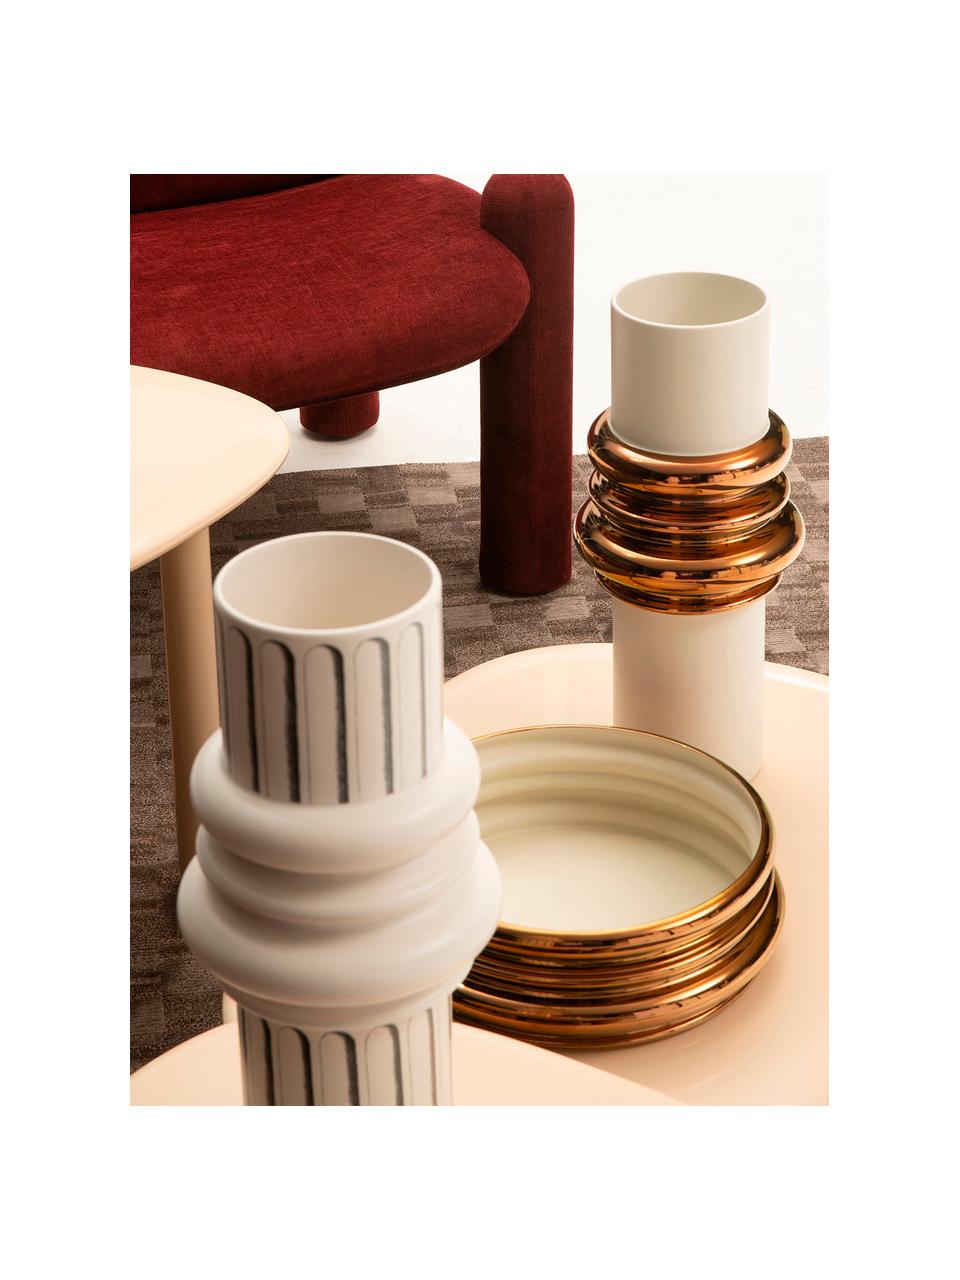 Designová váza z keramiky Ordini, V 45 cm, Keramika, Tlumeně bílá, černá, Ø 20 cm, V 45 cm